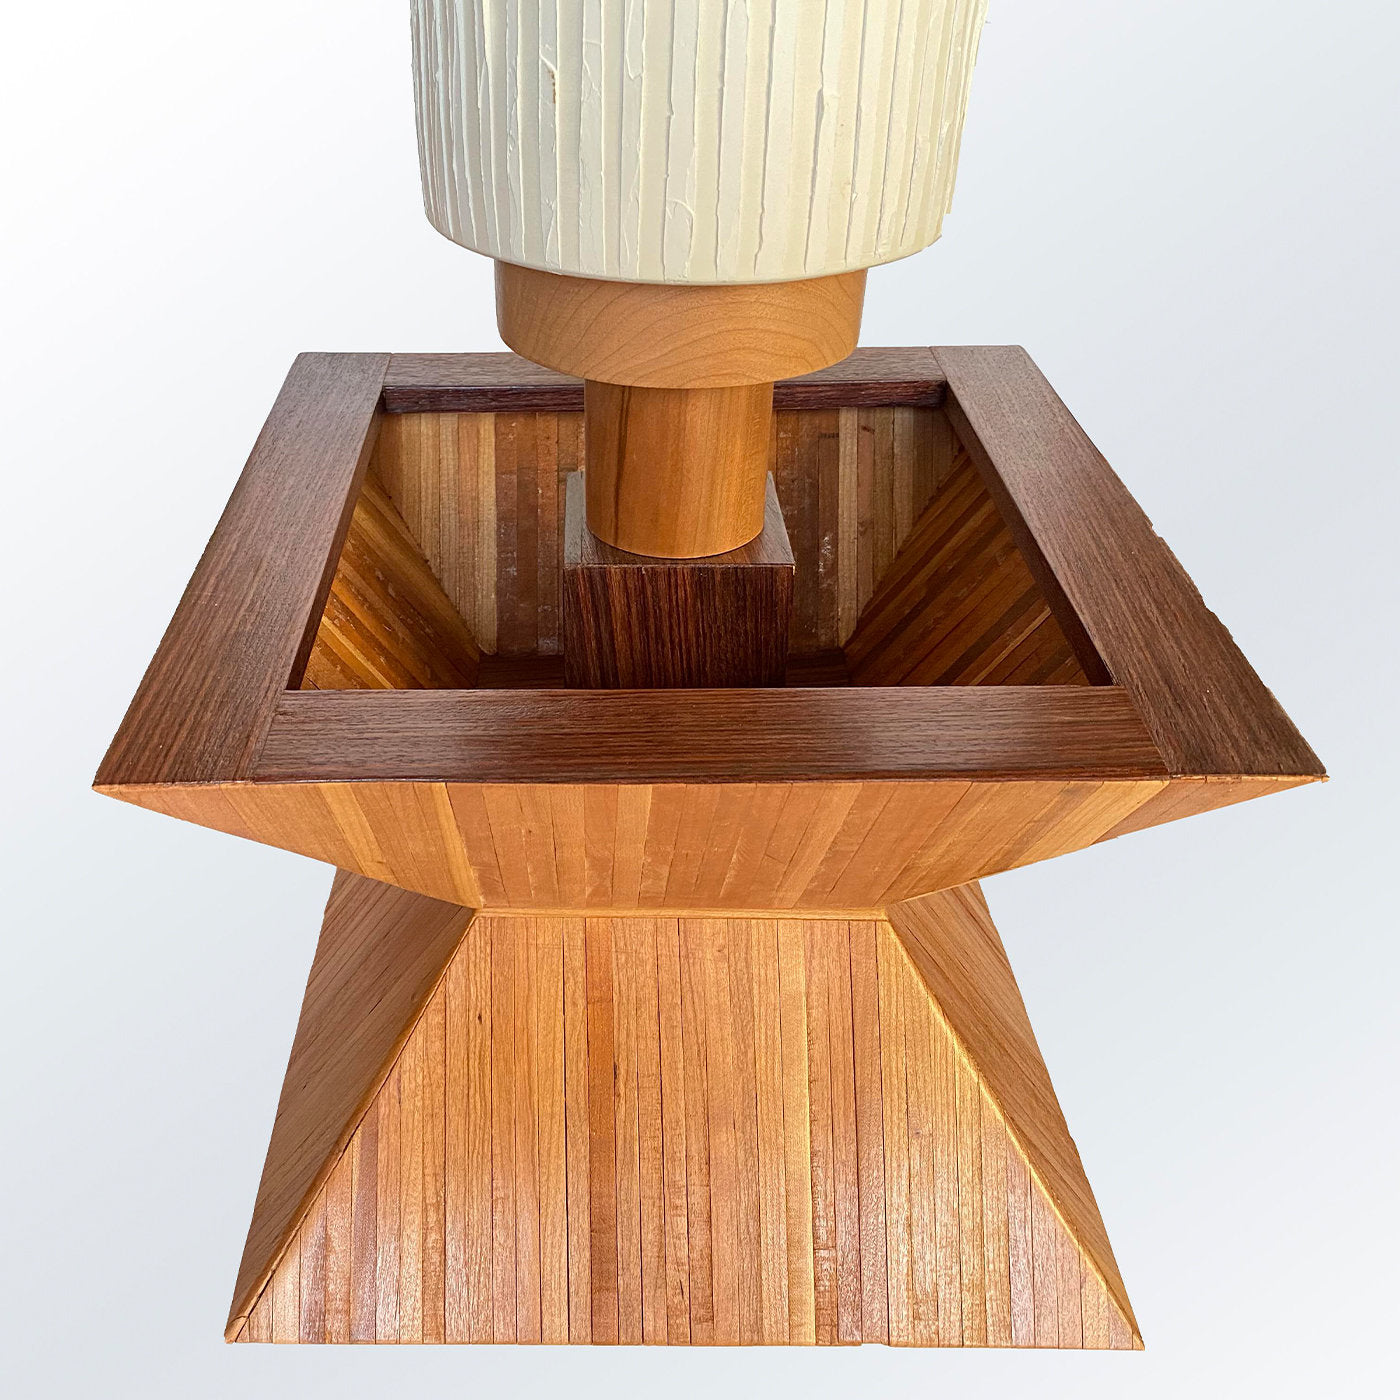 Totem Table Lamp by Mascia Meccani #10 - Alternative view 5